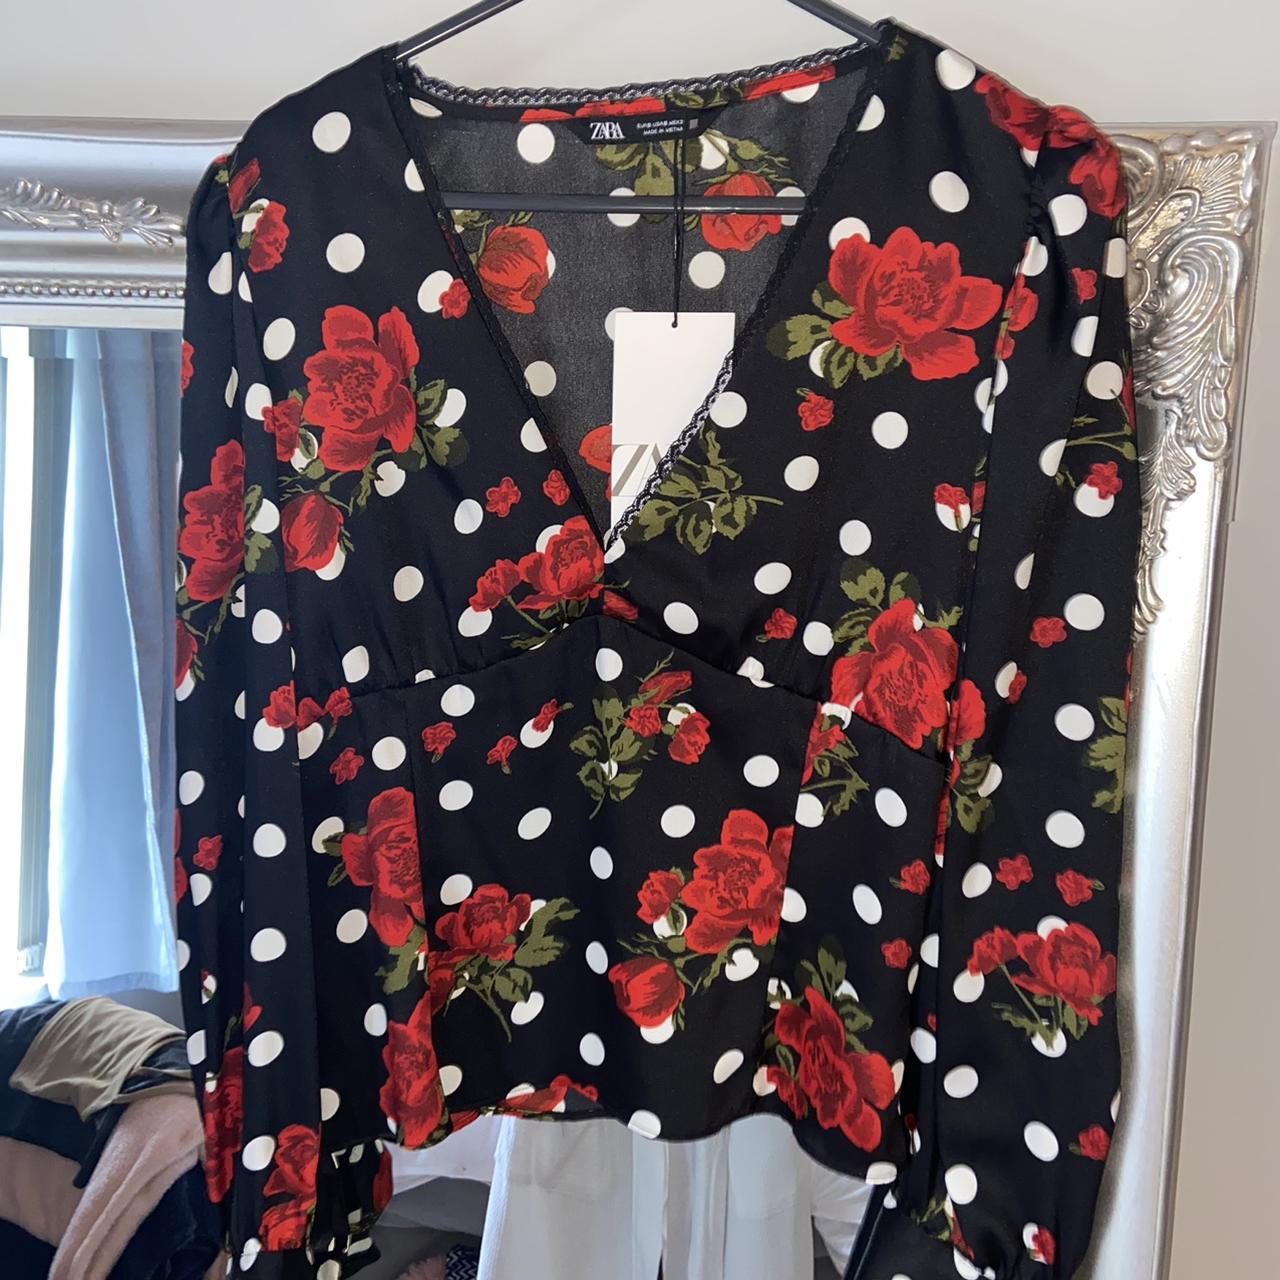 Zara black polka dot printed blouse with red roses - Depop